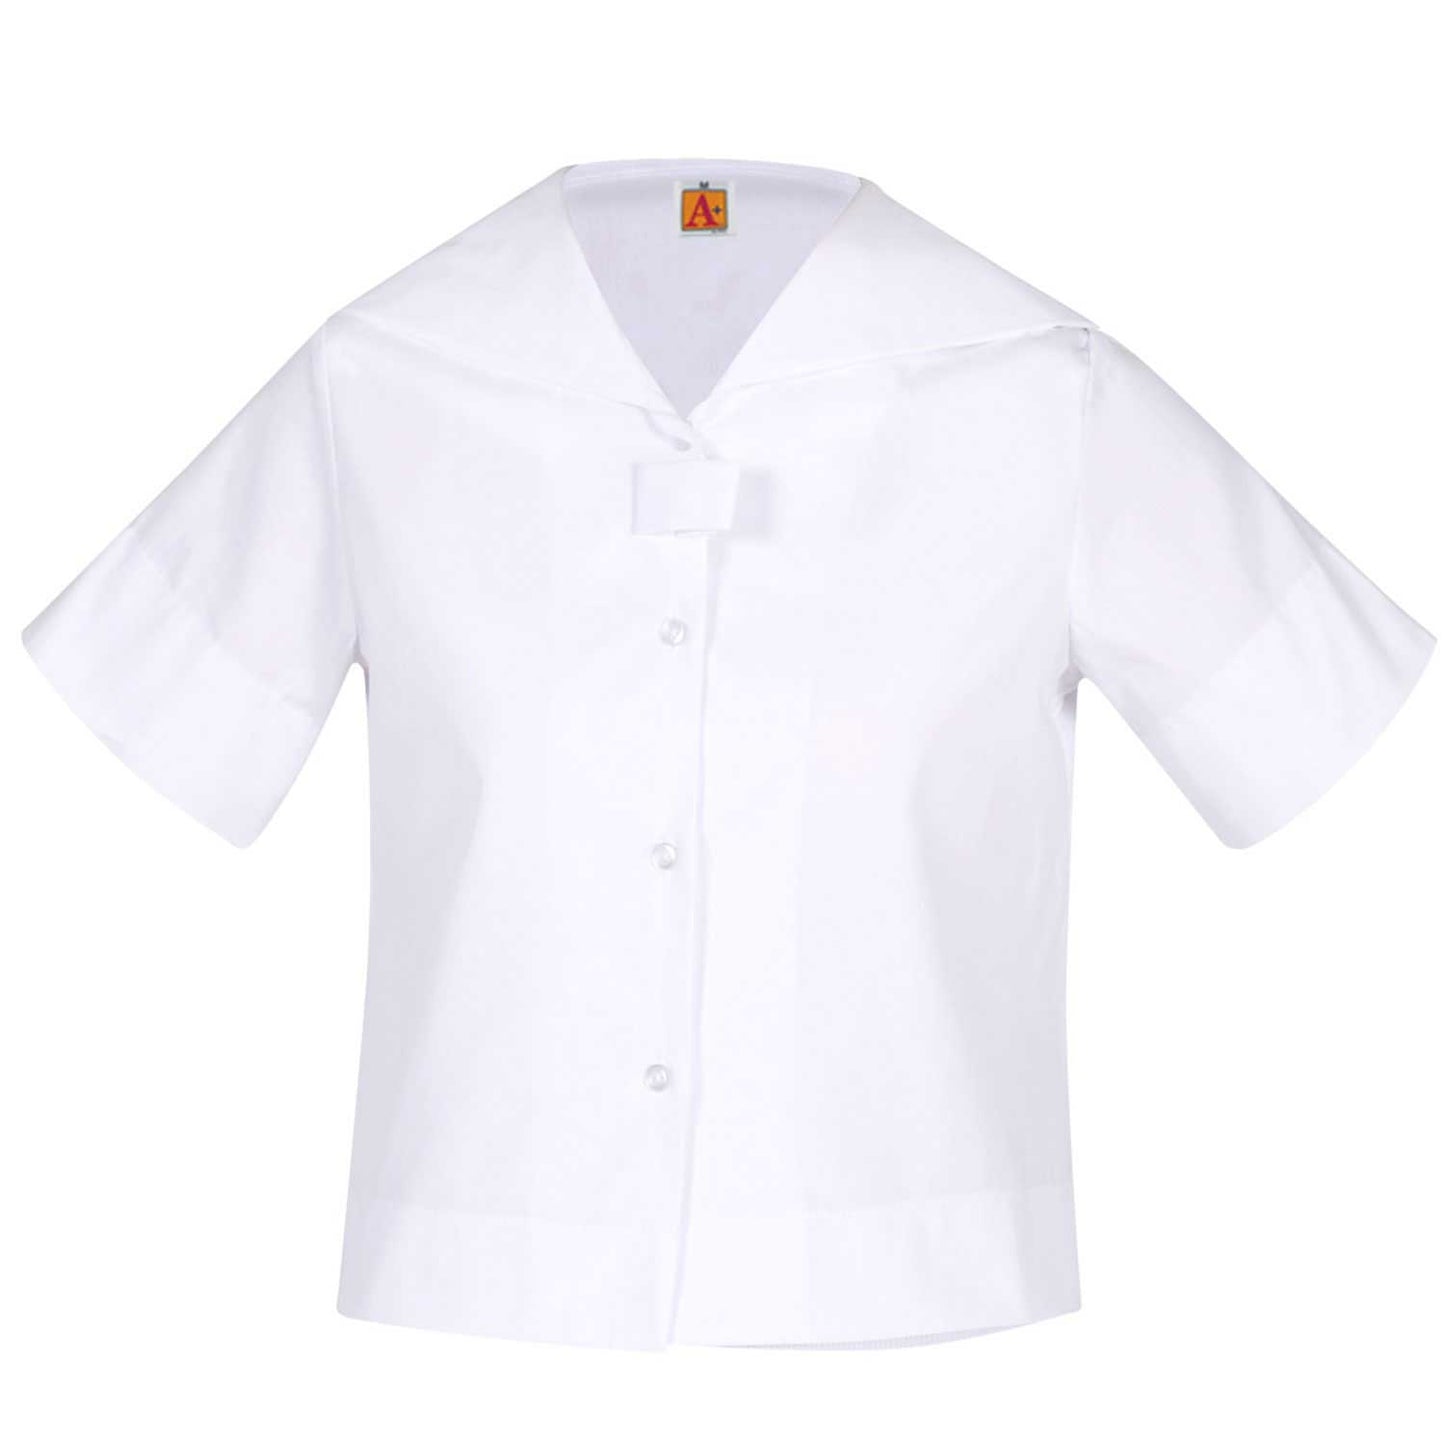 School Apparel Girl's Short Sleeve Middy (Sailor) Blouse - White